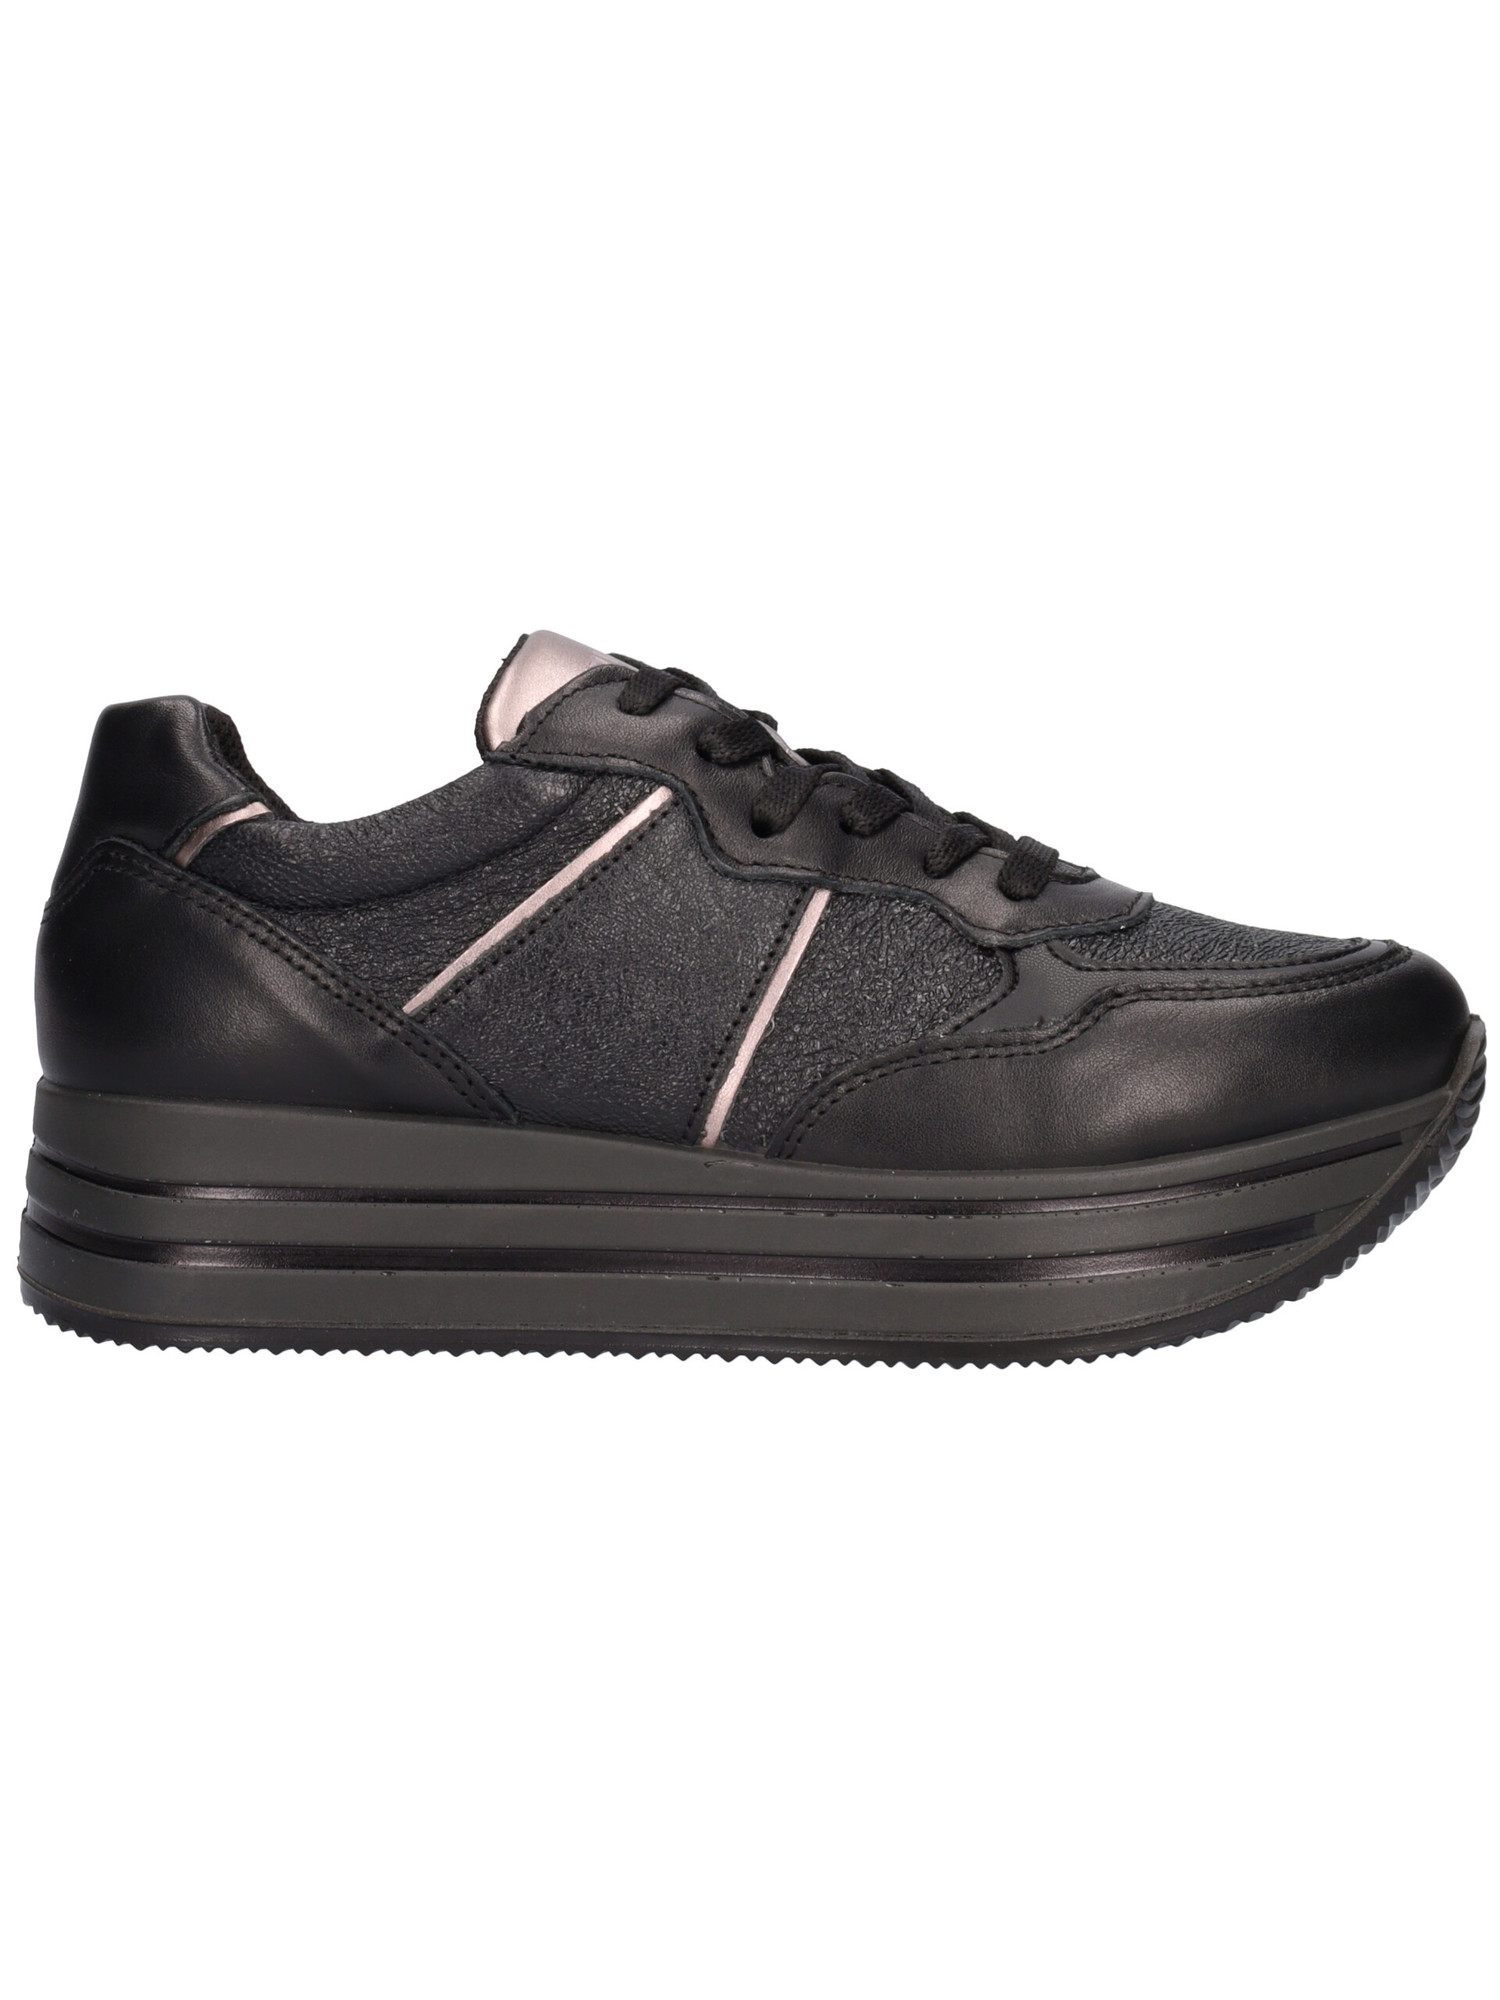 sneaker-platform-igi-and-co-da-donna-nera-3f01fa